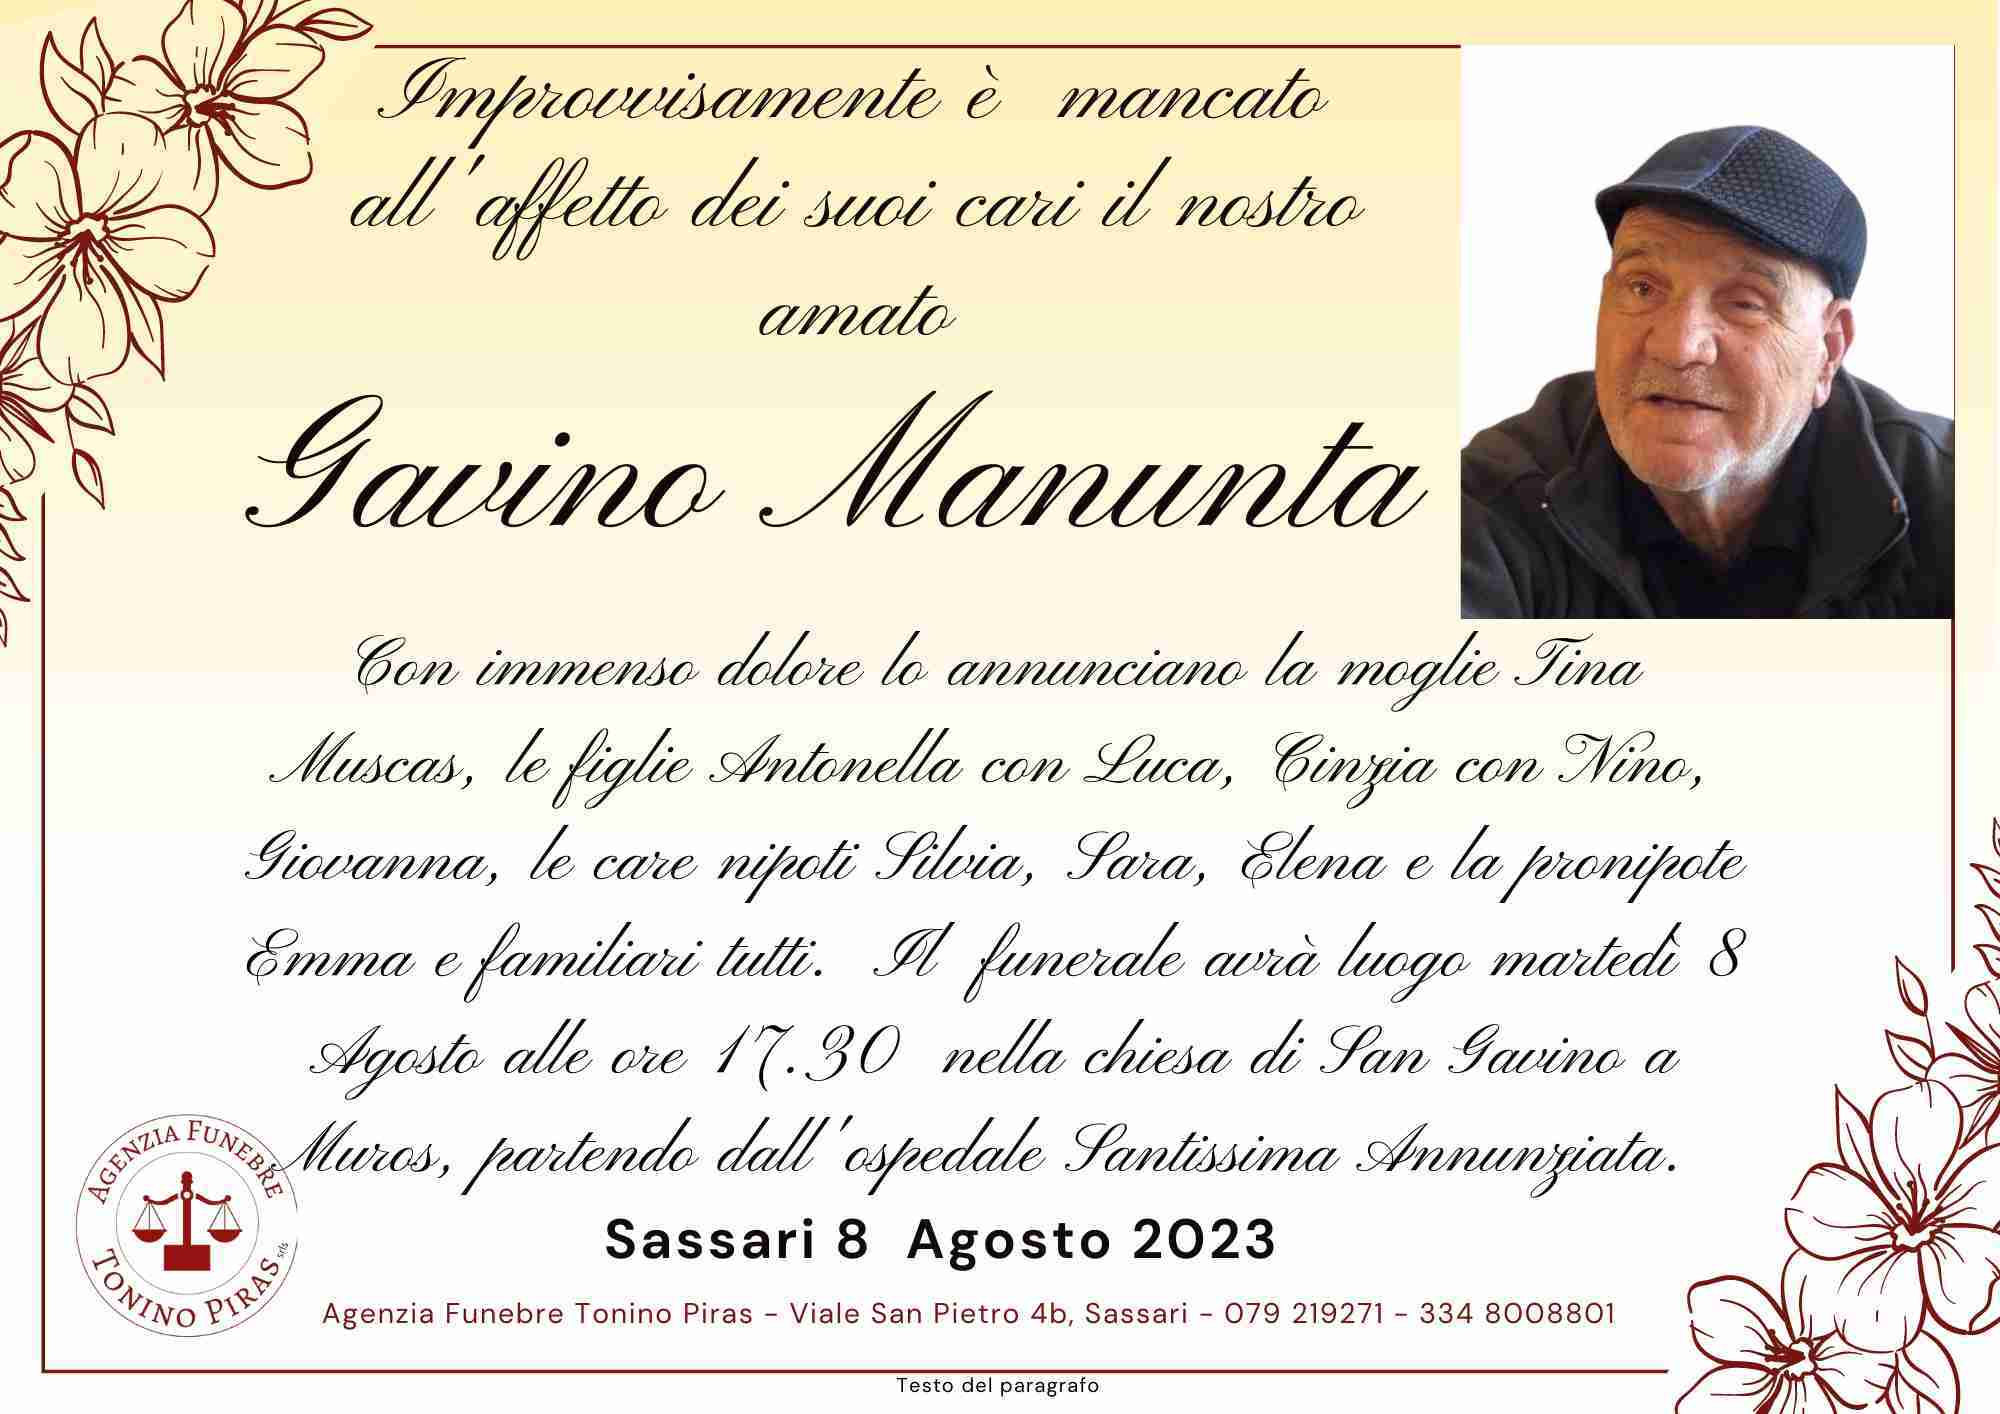 Gavino Manunta